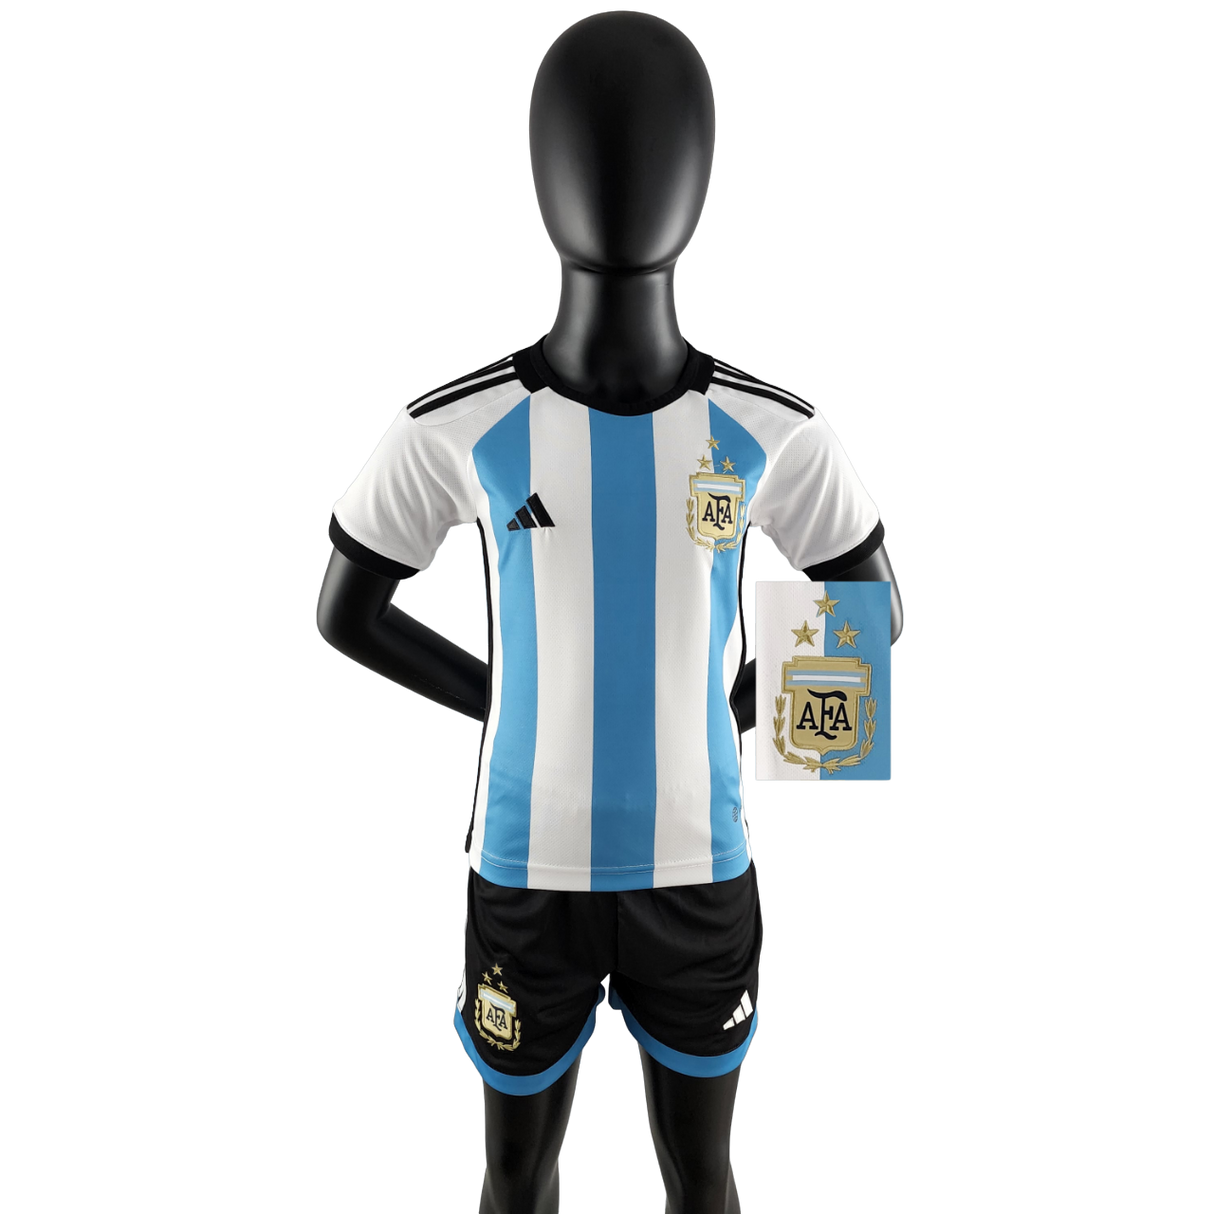 Argentina Retro 2022  World Cup champion 3-star player version